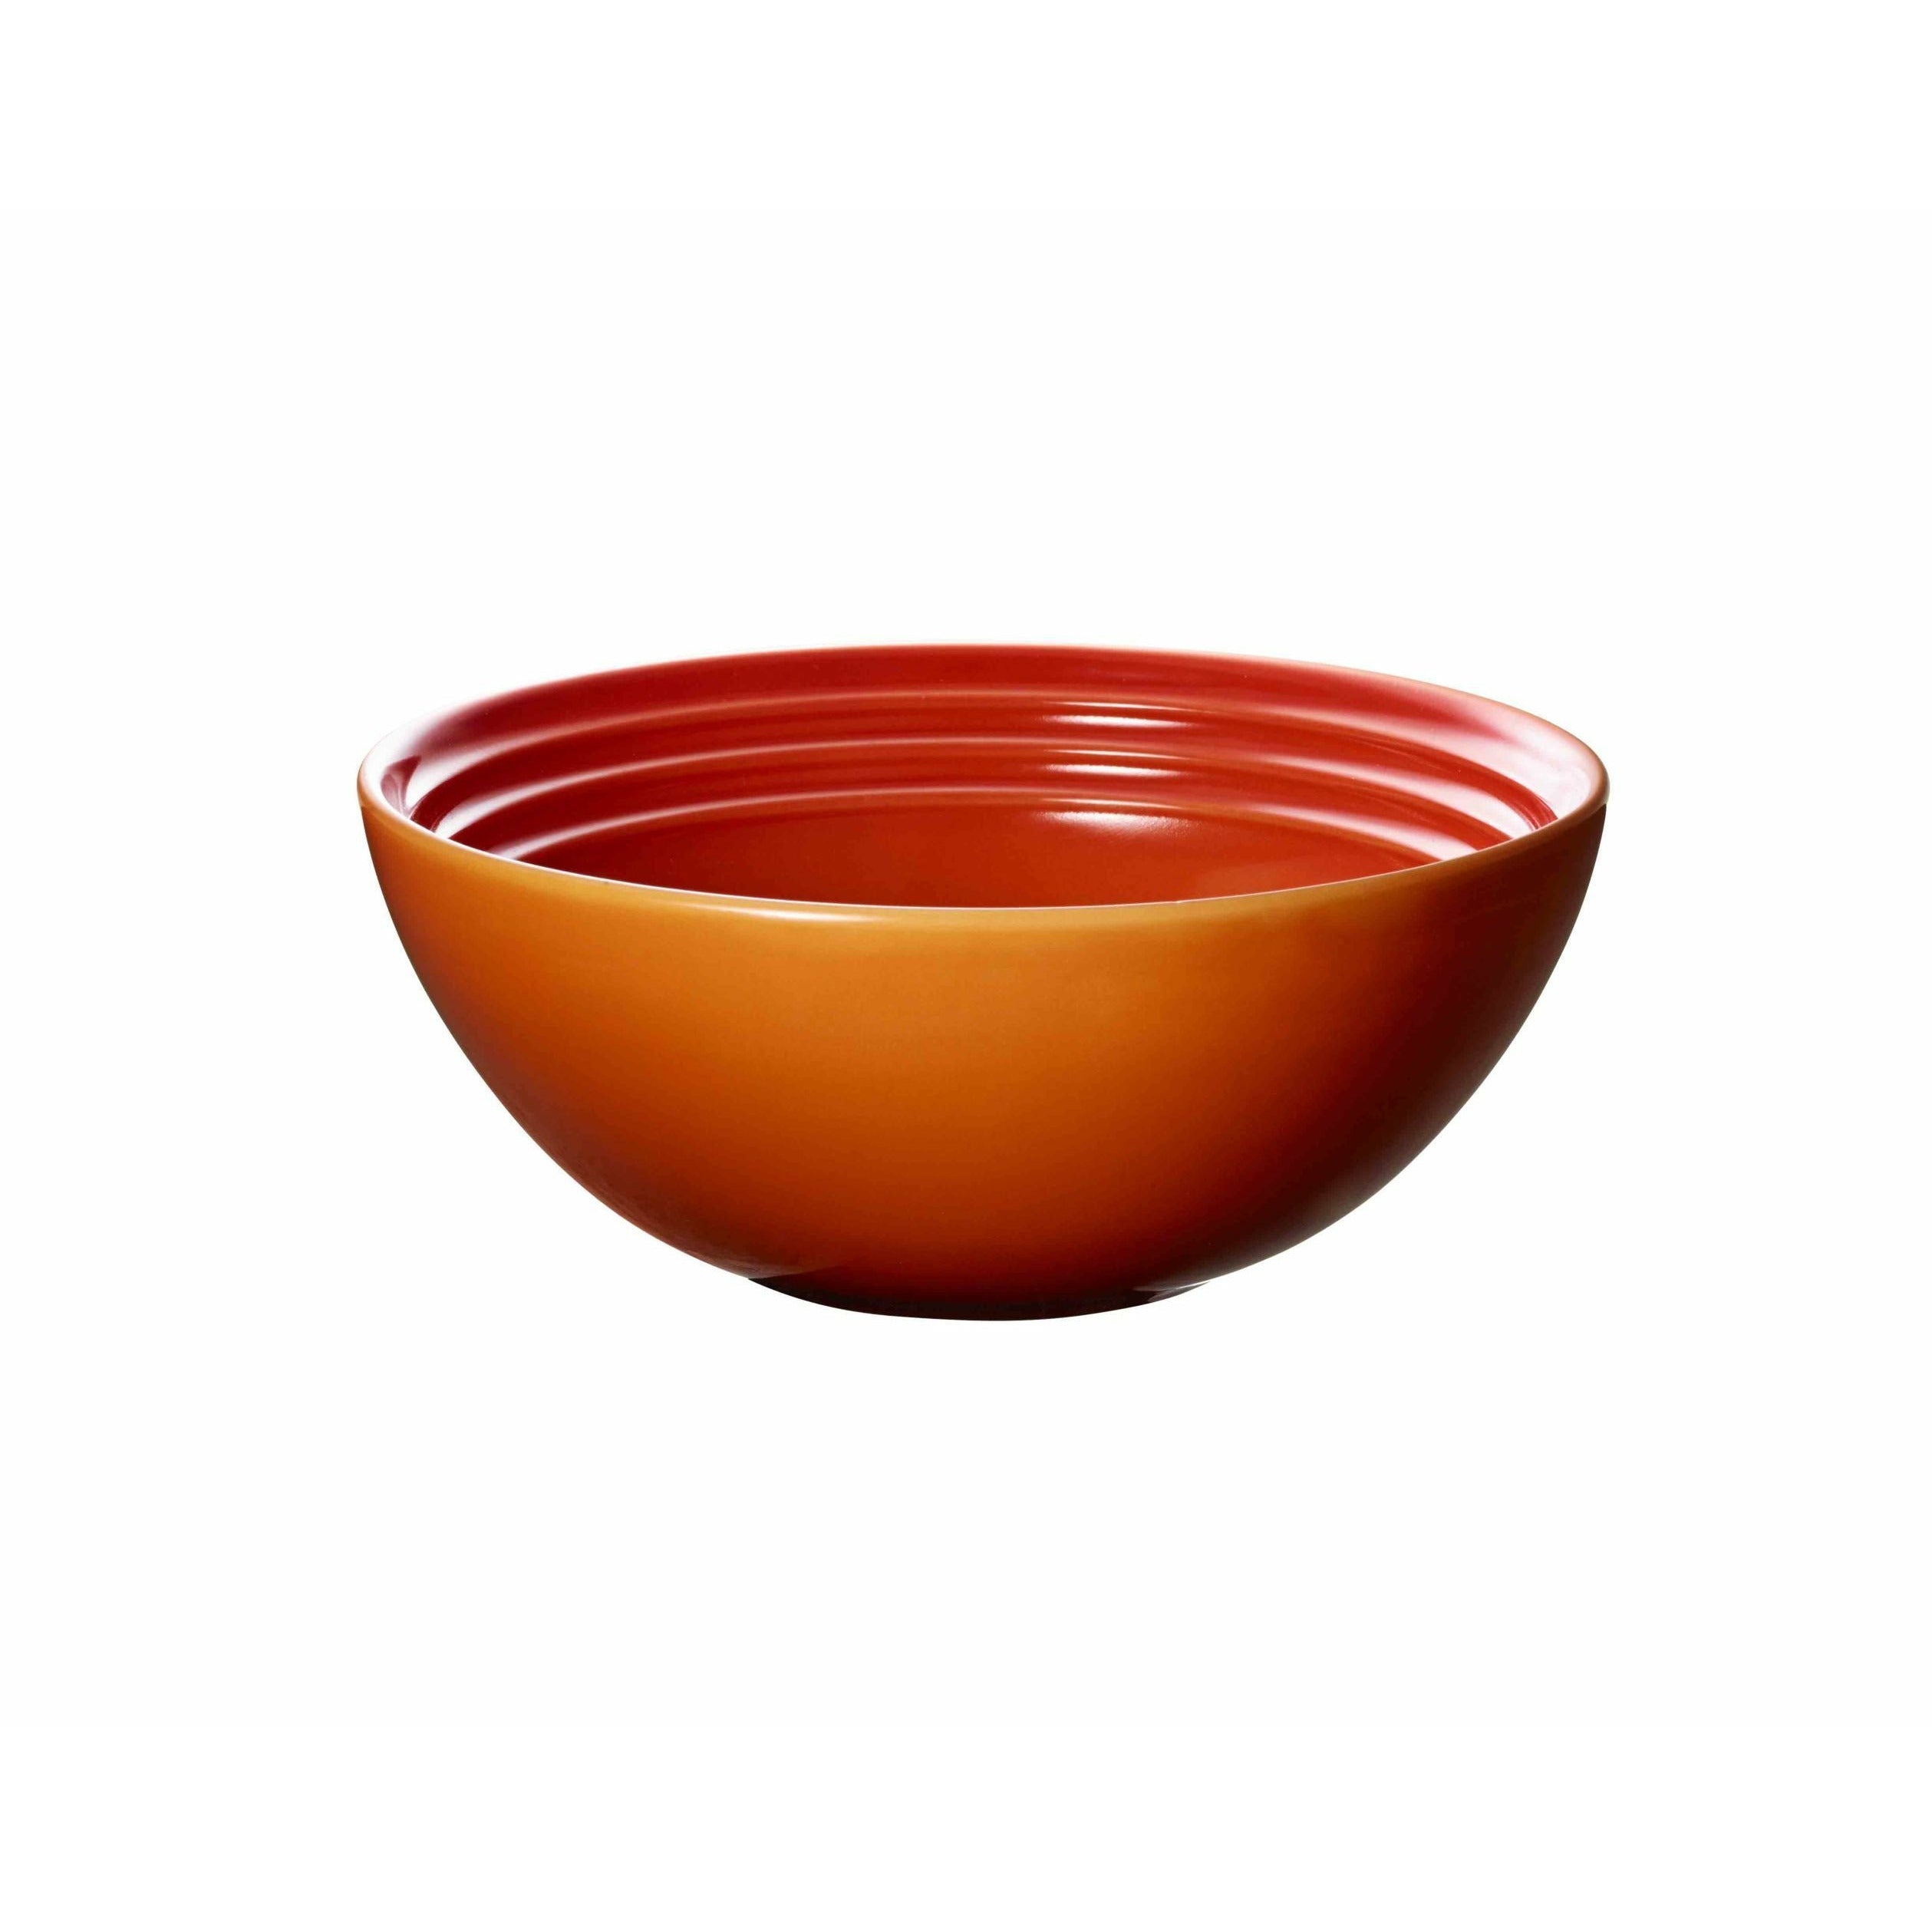 Le Creuset Signature Muesli Bowl 16 Cm, Oven Red